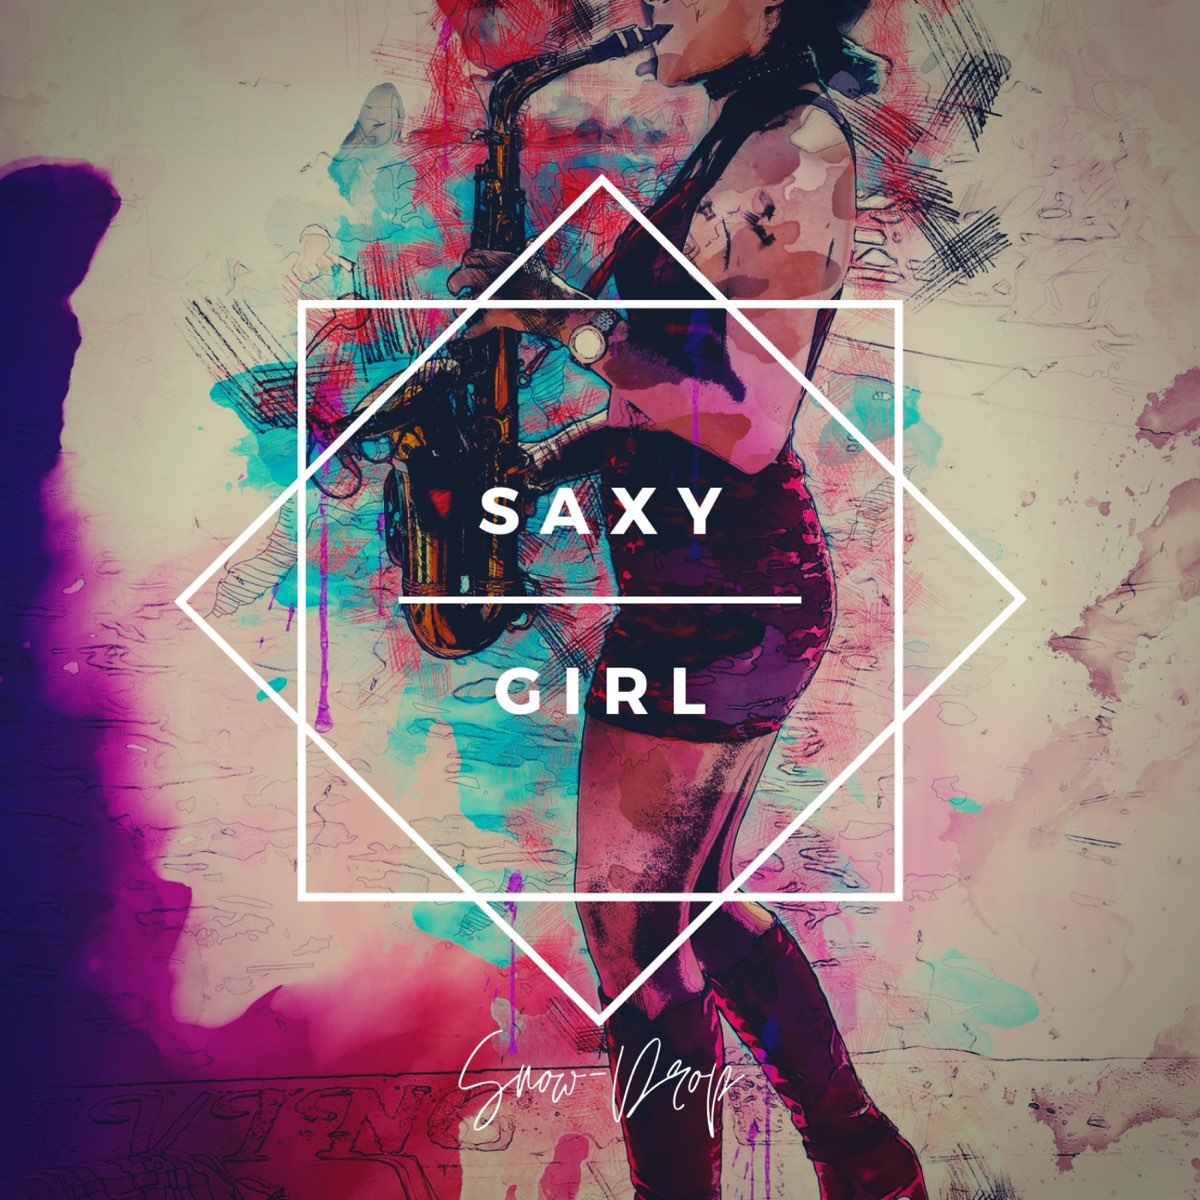 Saxyfreeporn - Saxy Girl - Single by Snow-Drop on Apple Music